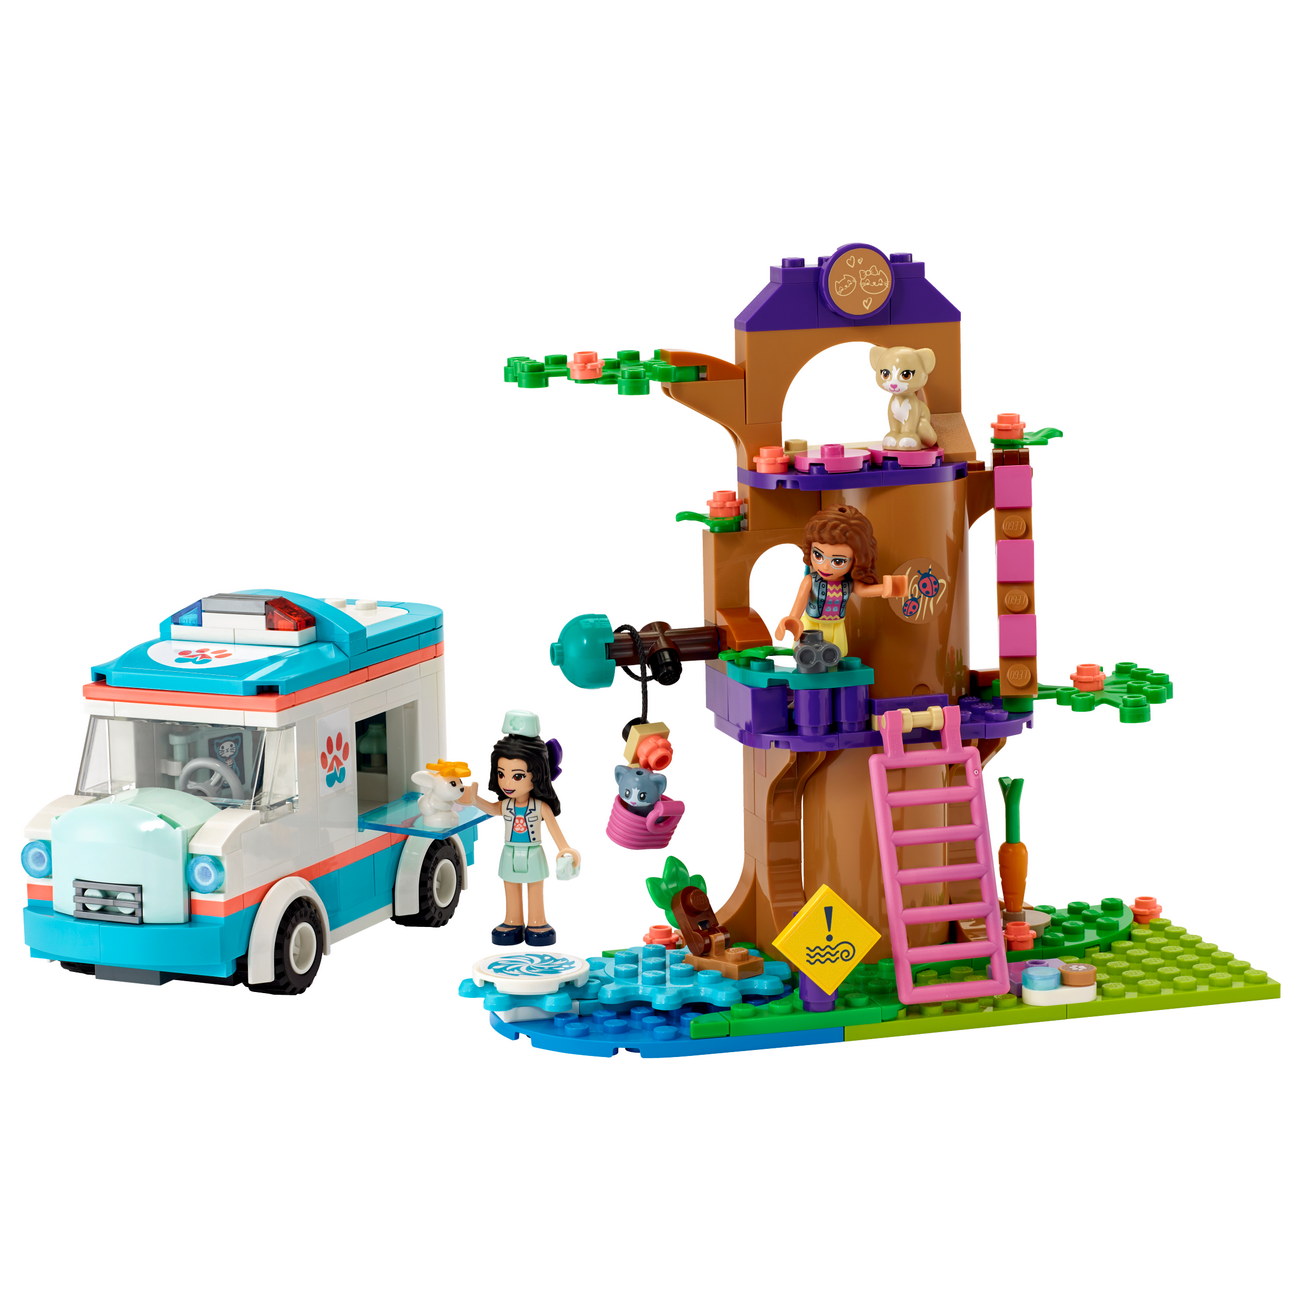 LEGO Friends 41445 - Tierrettungswagen